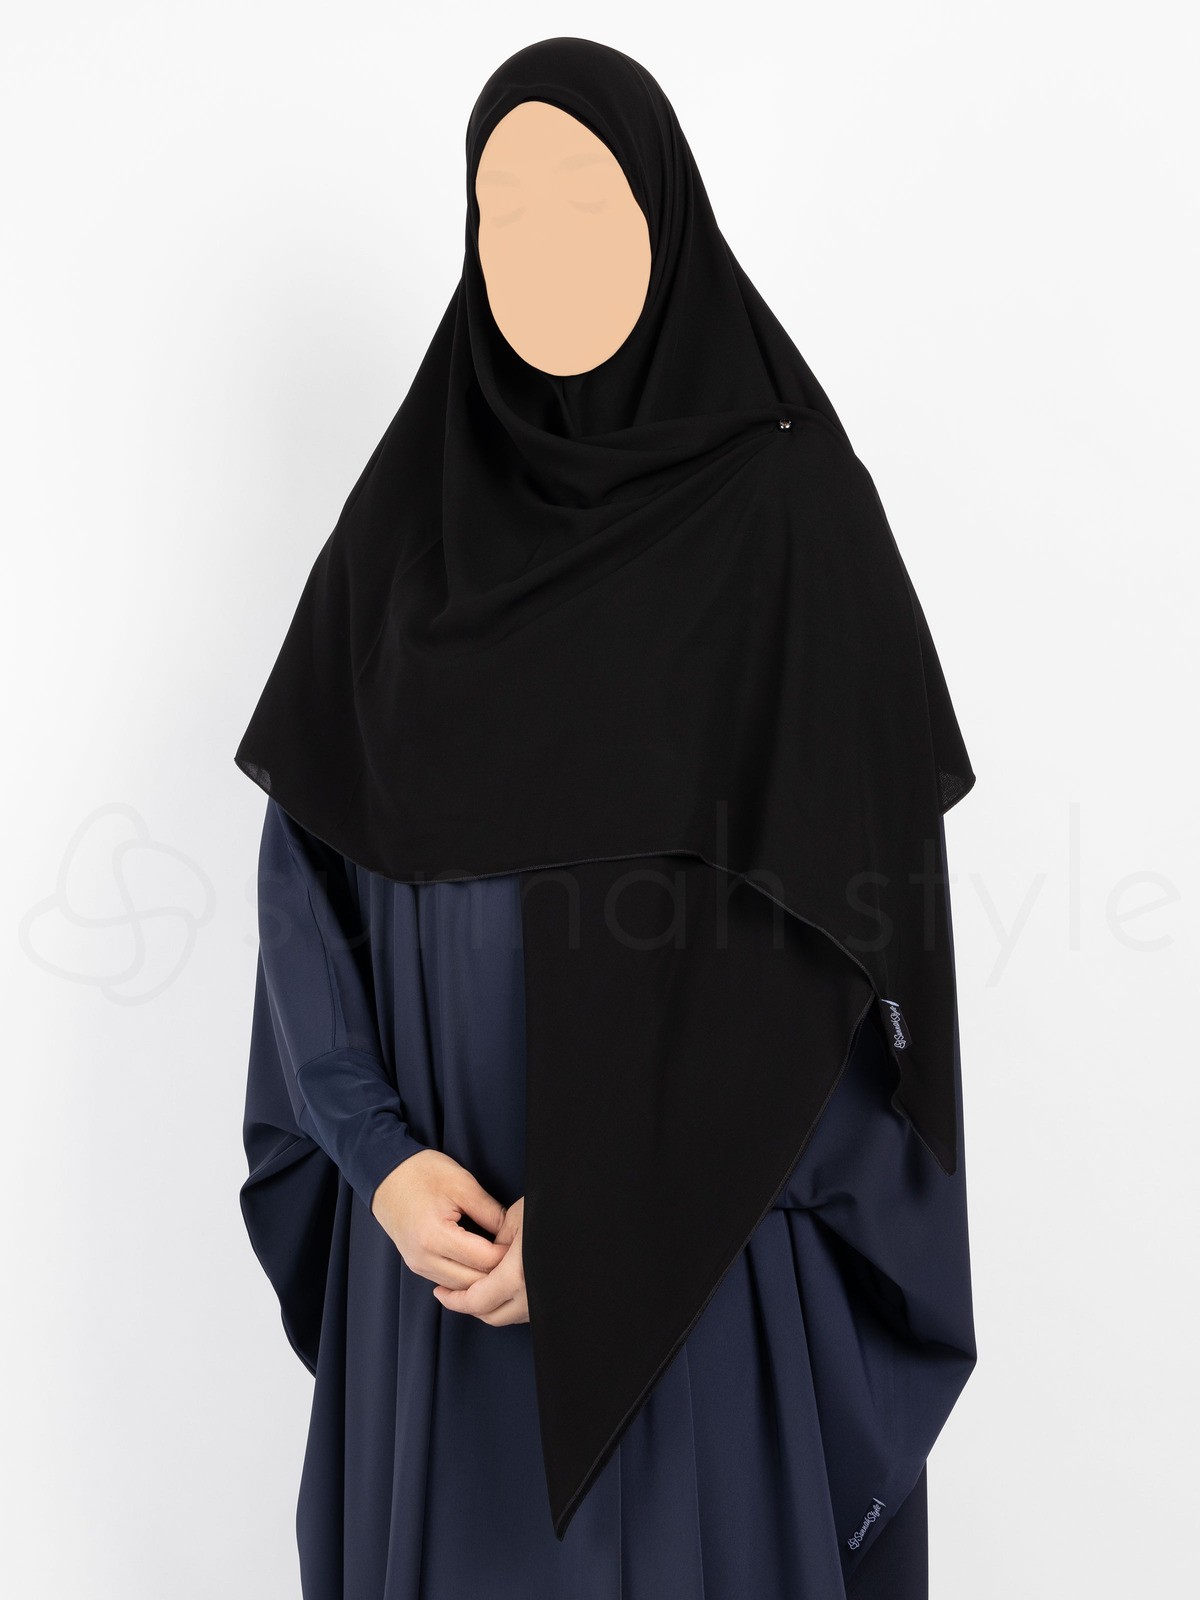 Sunnah Style - Essentials Square Hijab (Premium Chiffon) - Large (Black)